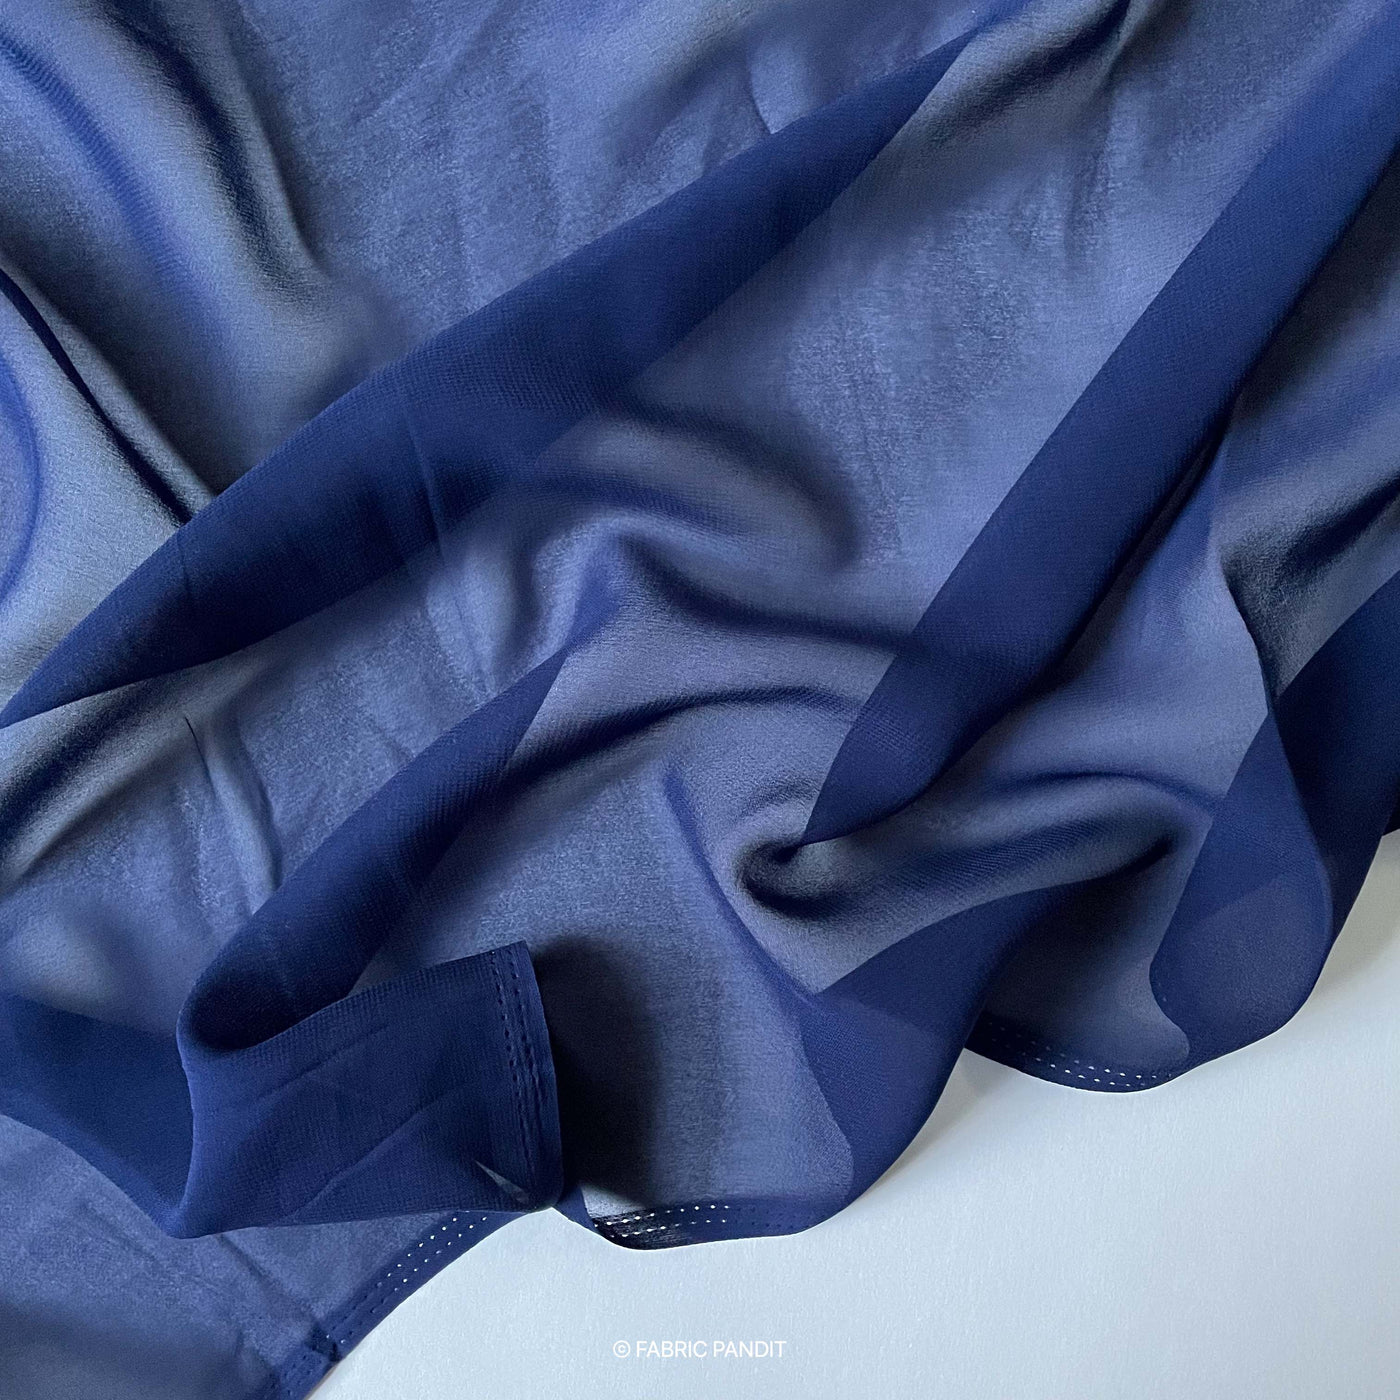 Fabric Pandit Cut Piece 0.25M (CUT PIECE) Dark Blue Color Pure Georgette Fabric (Width 44 inches)